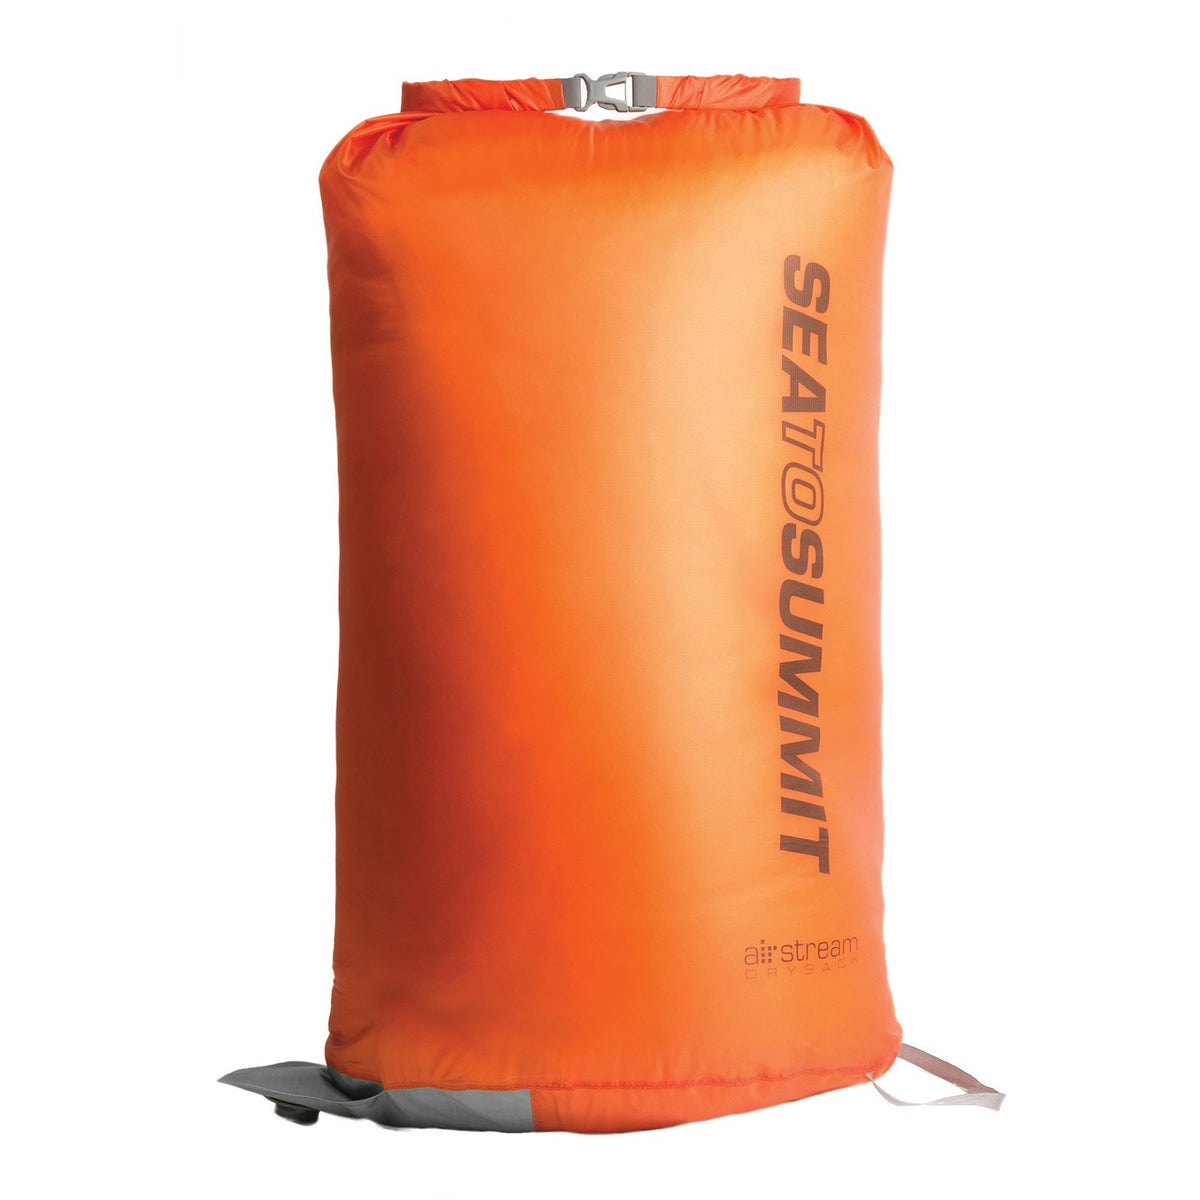 Sea to Summit Air Stream Pump Sack 20l, front view in orange colour